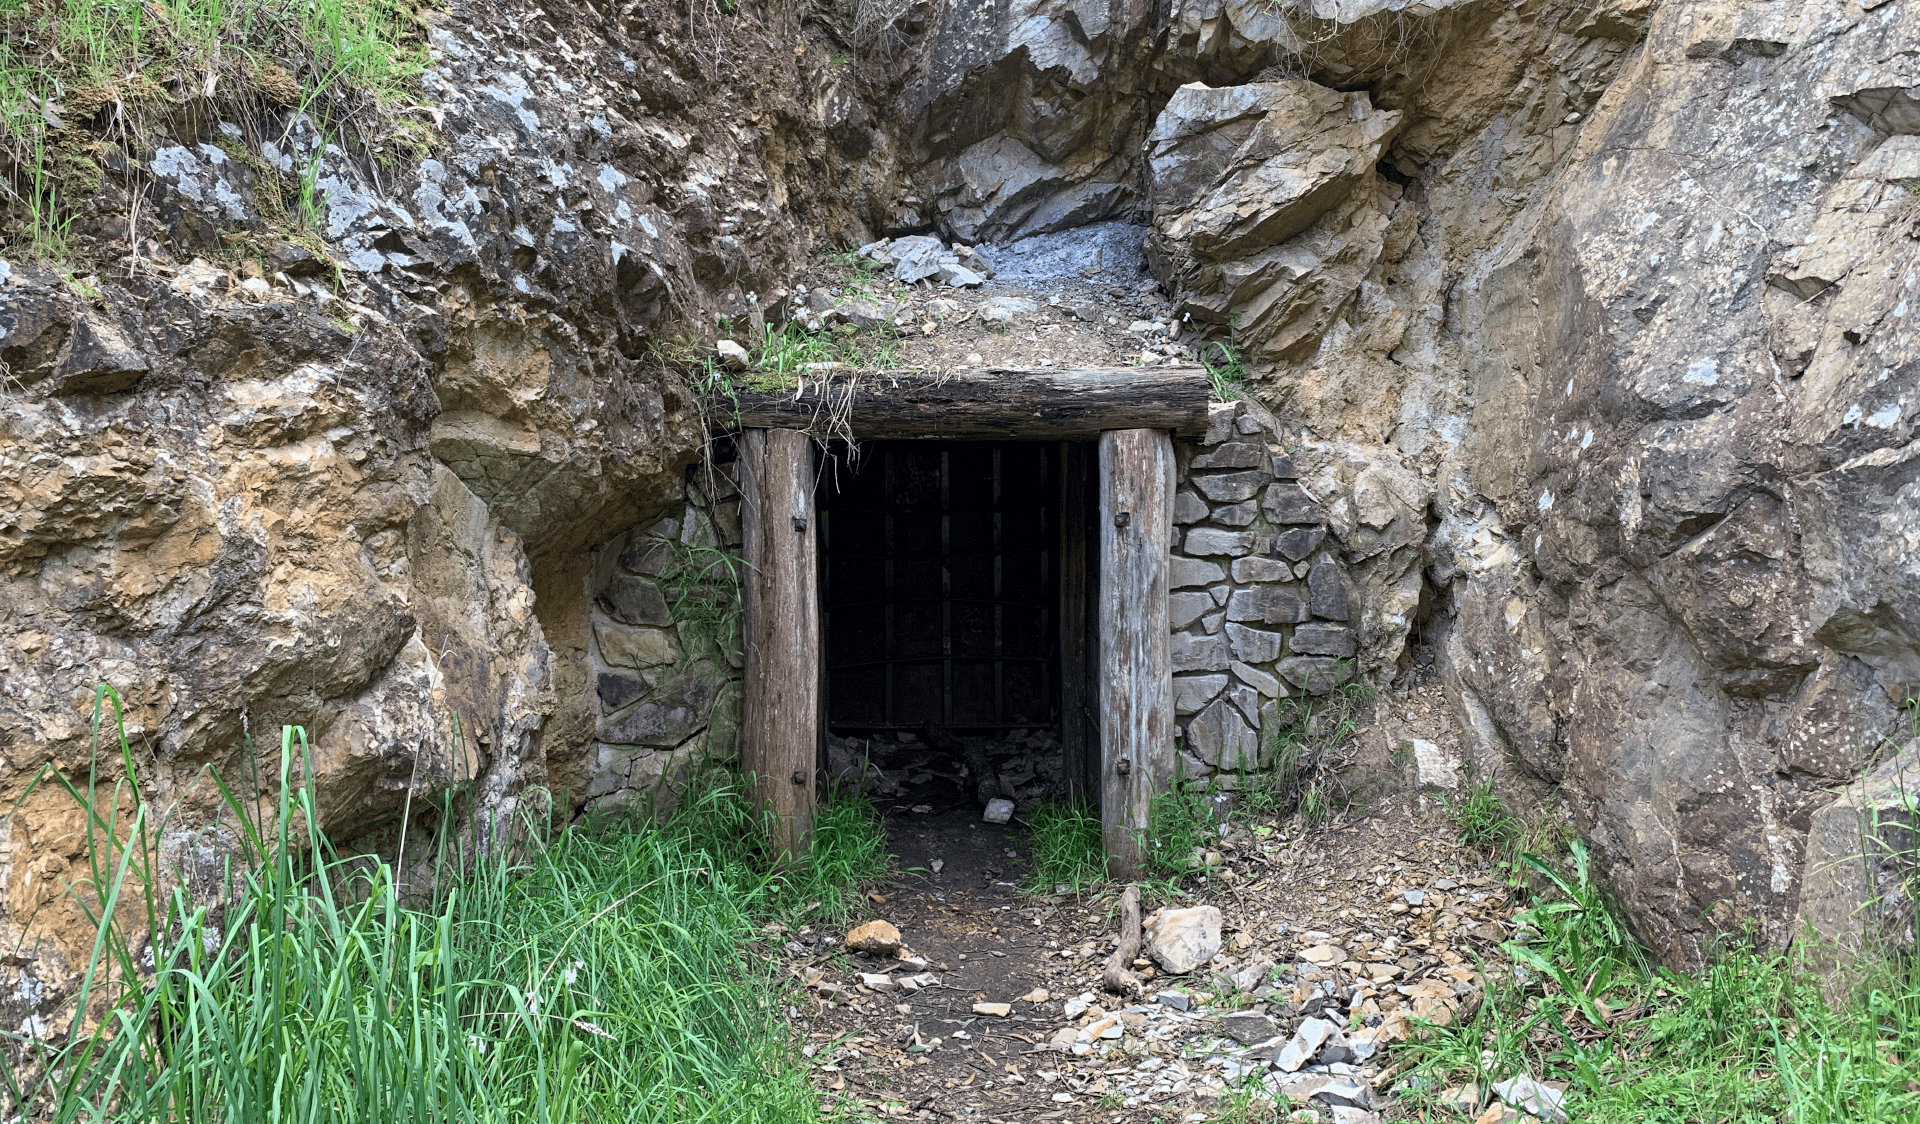 A mine entrance in Warrandyte State Park